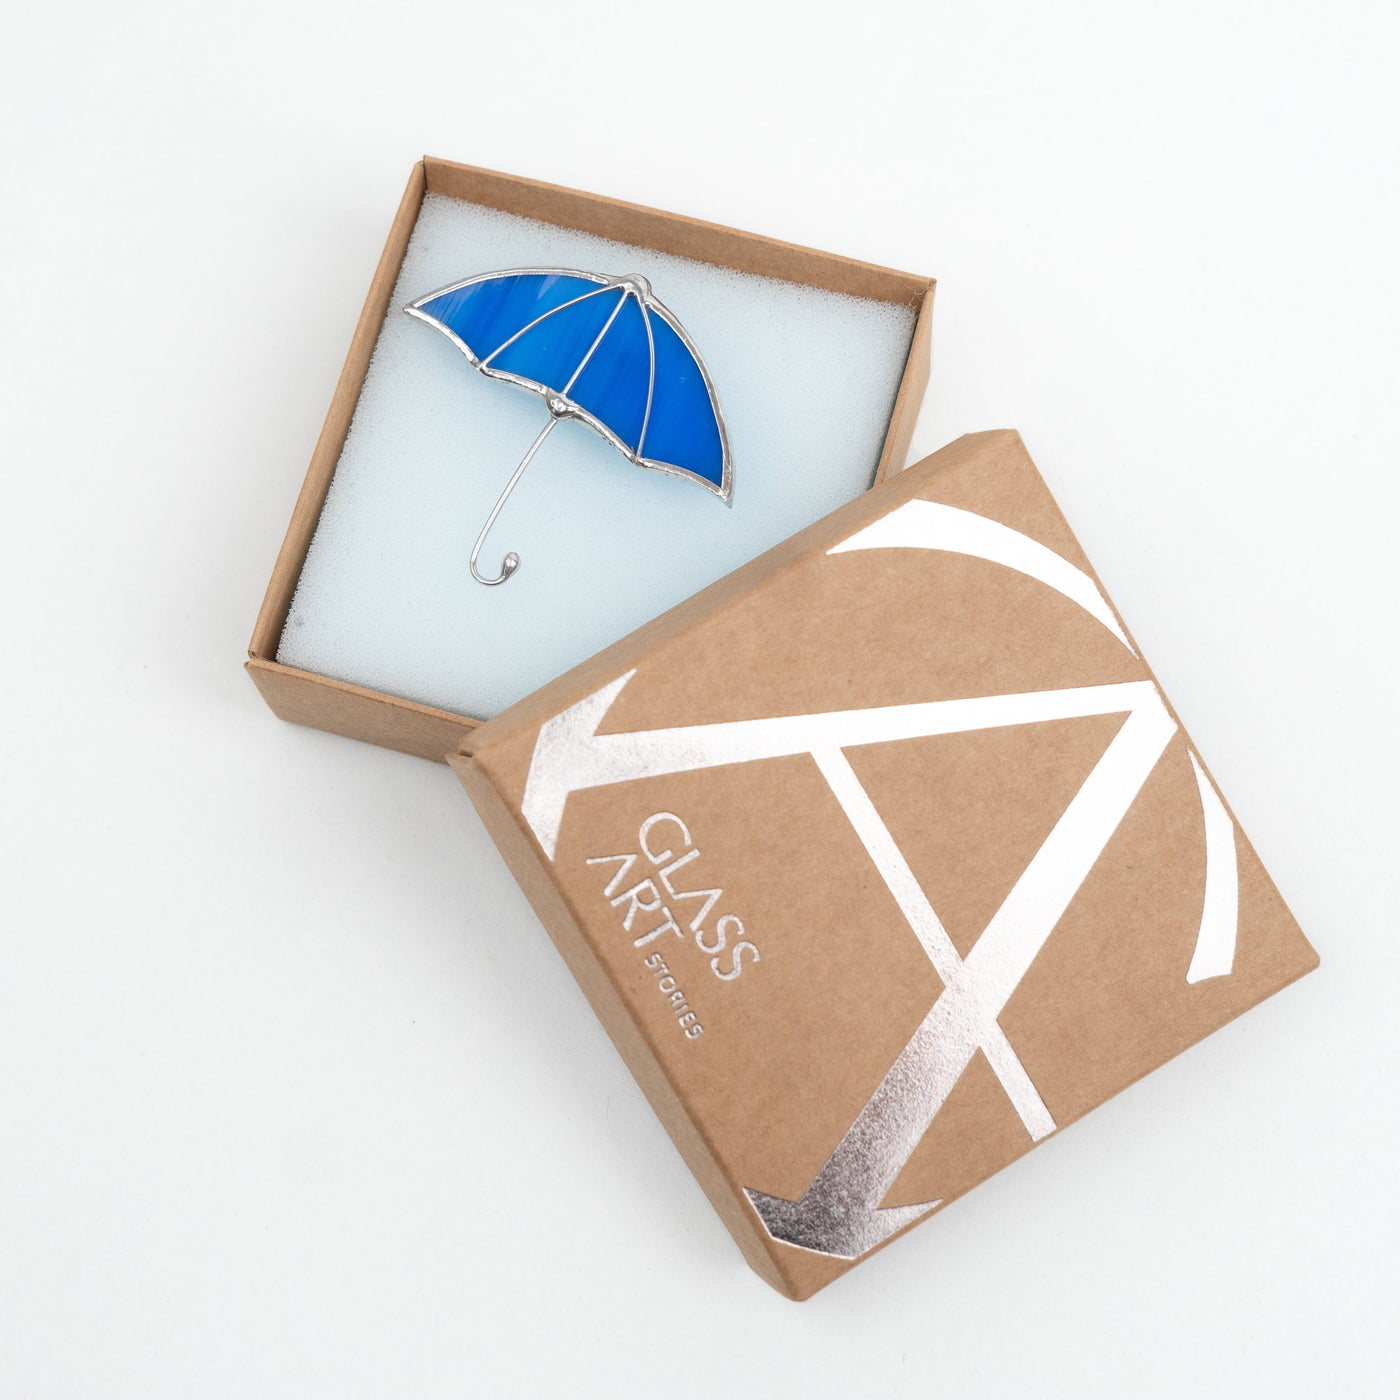 Blue umbrella brooch in a brand box